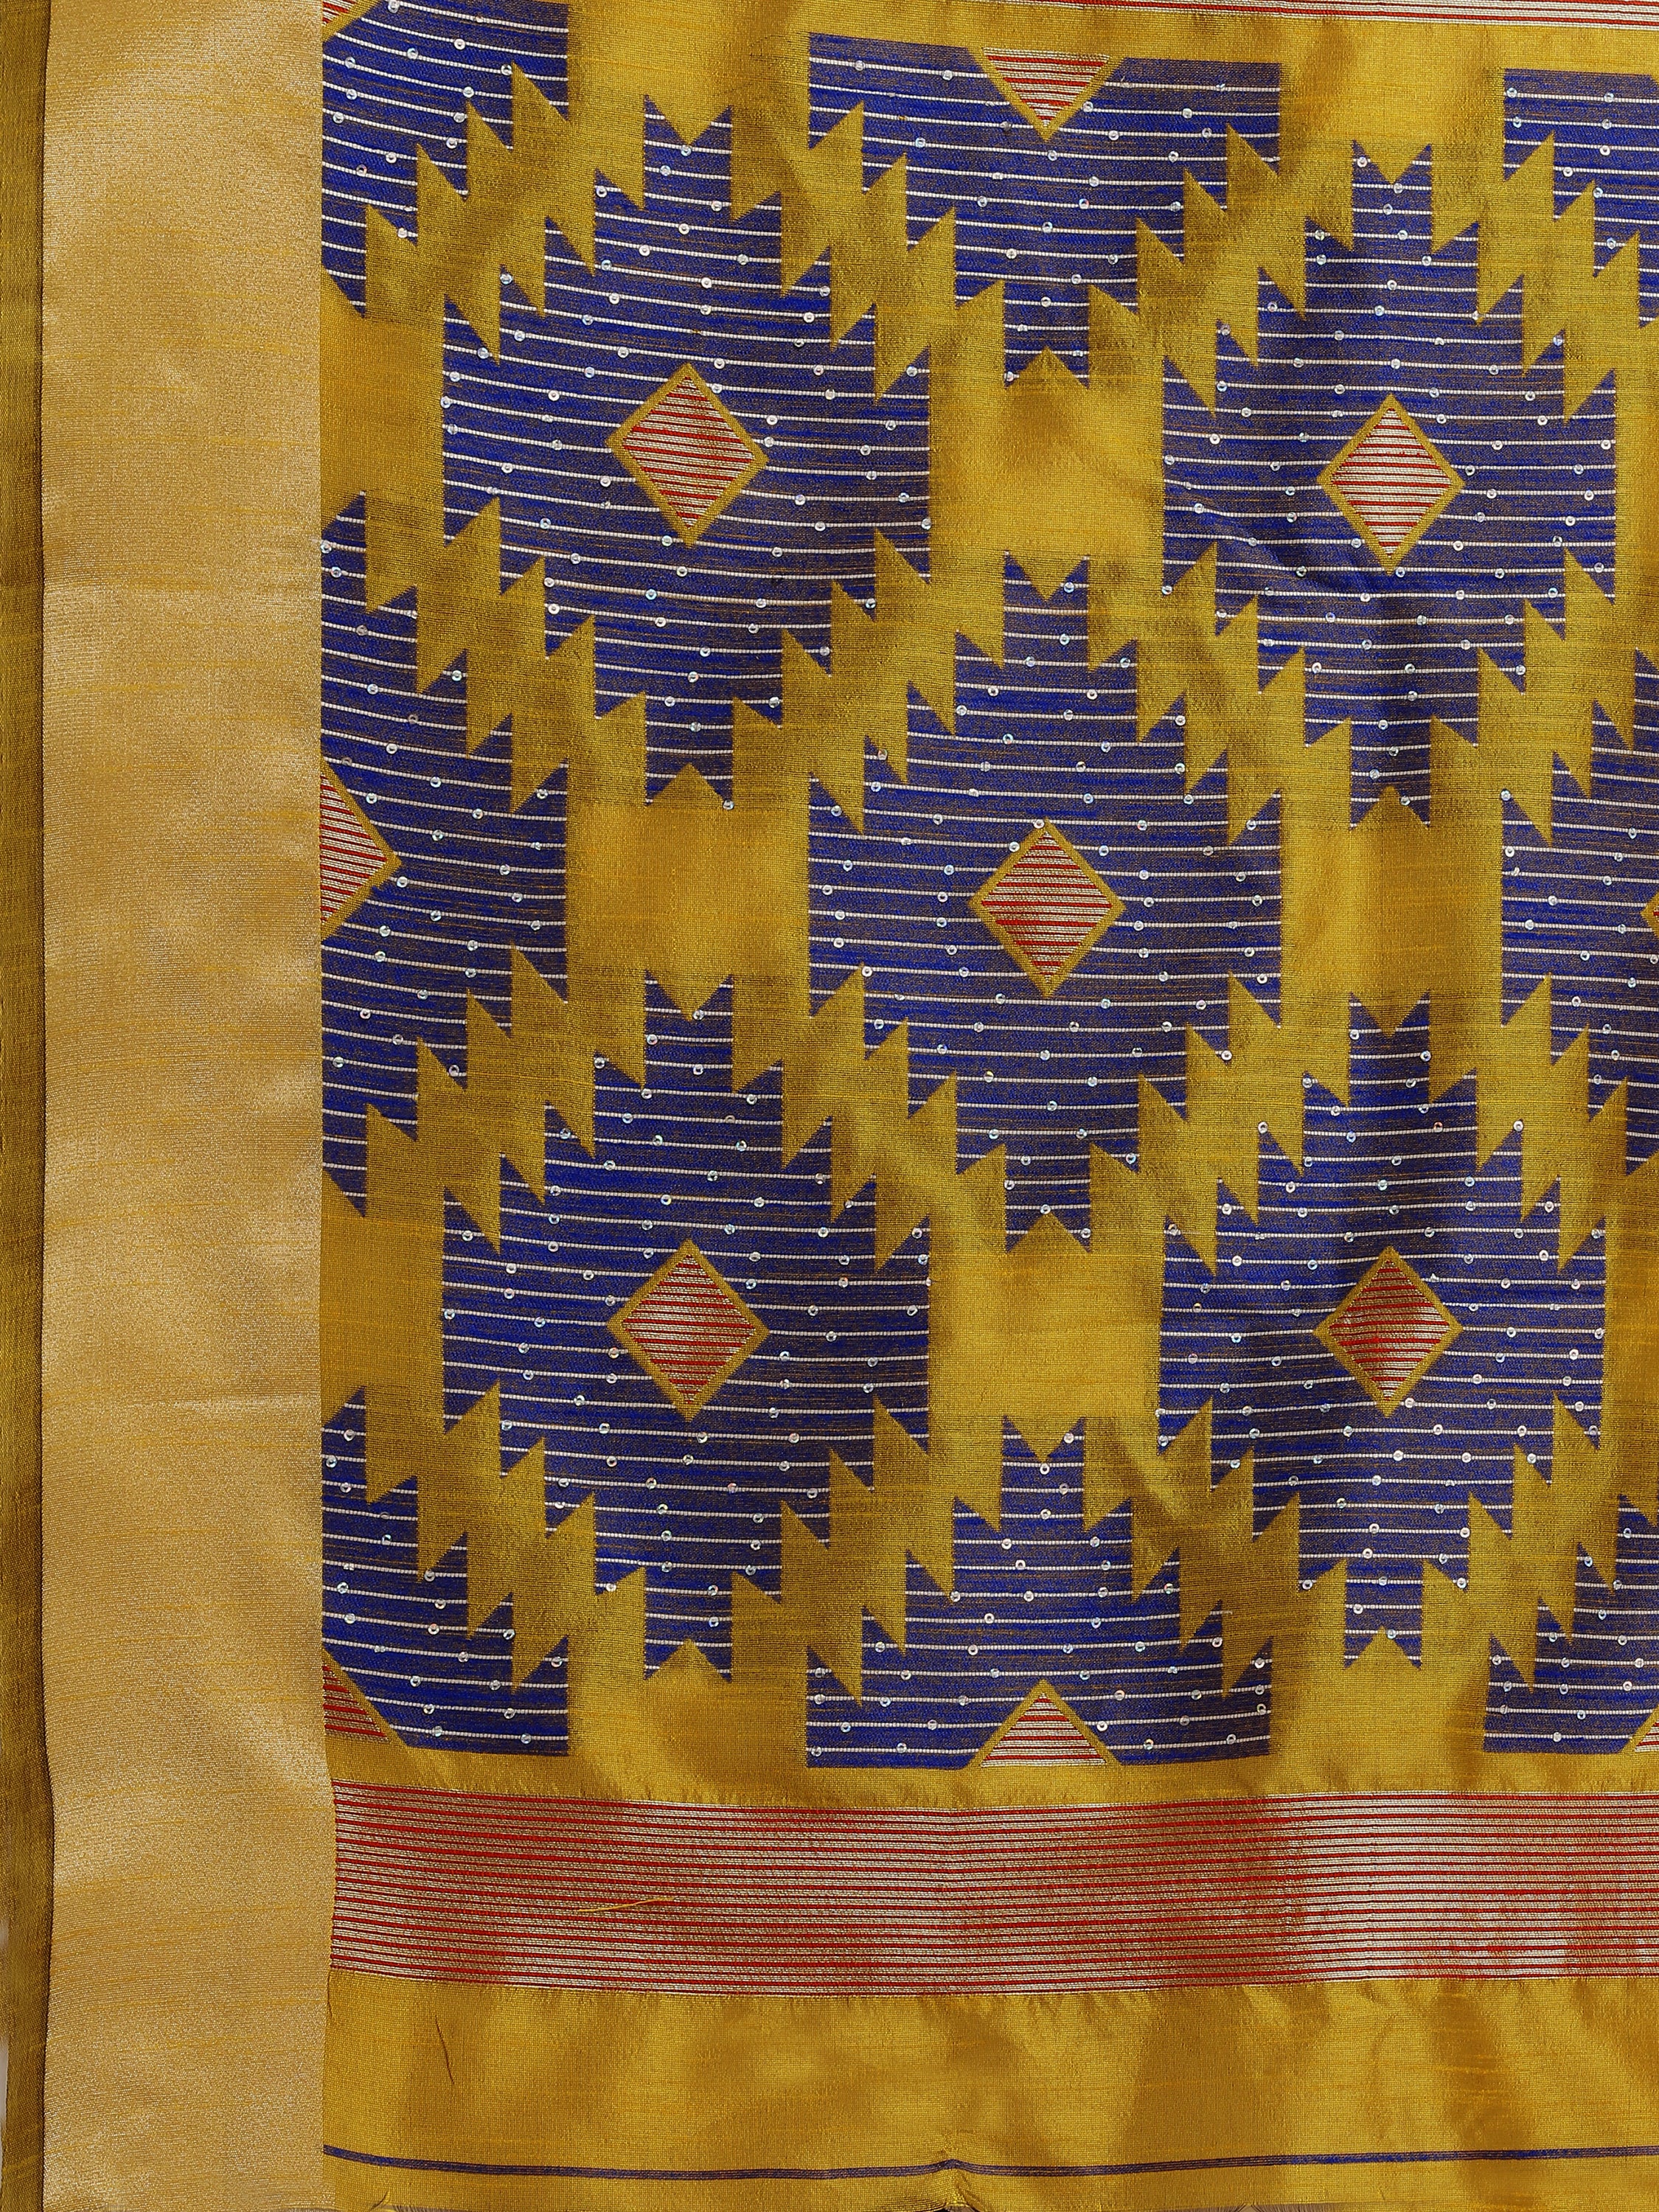 Mustard Color Banglori Raw Silk Saree - Nimisha Collection YF#23036